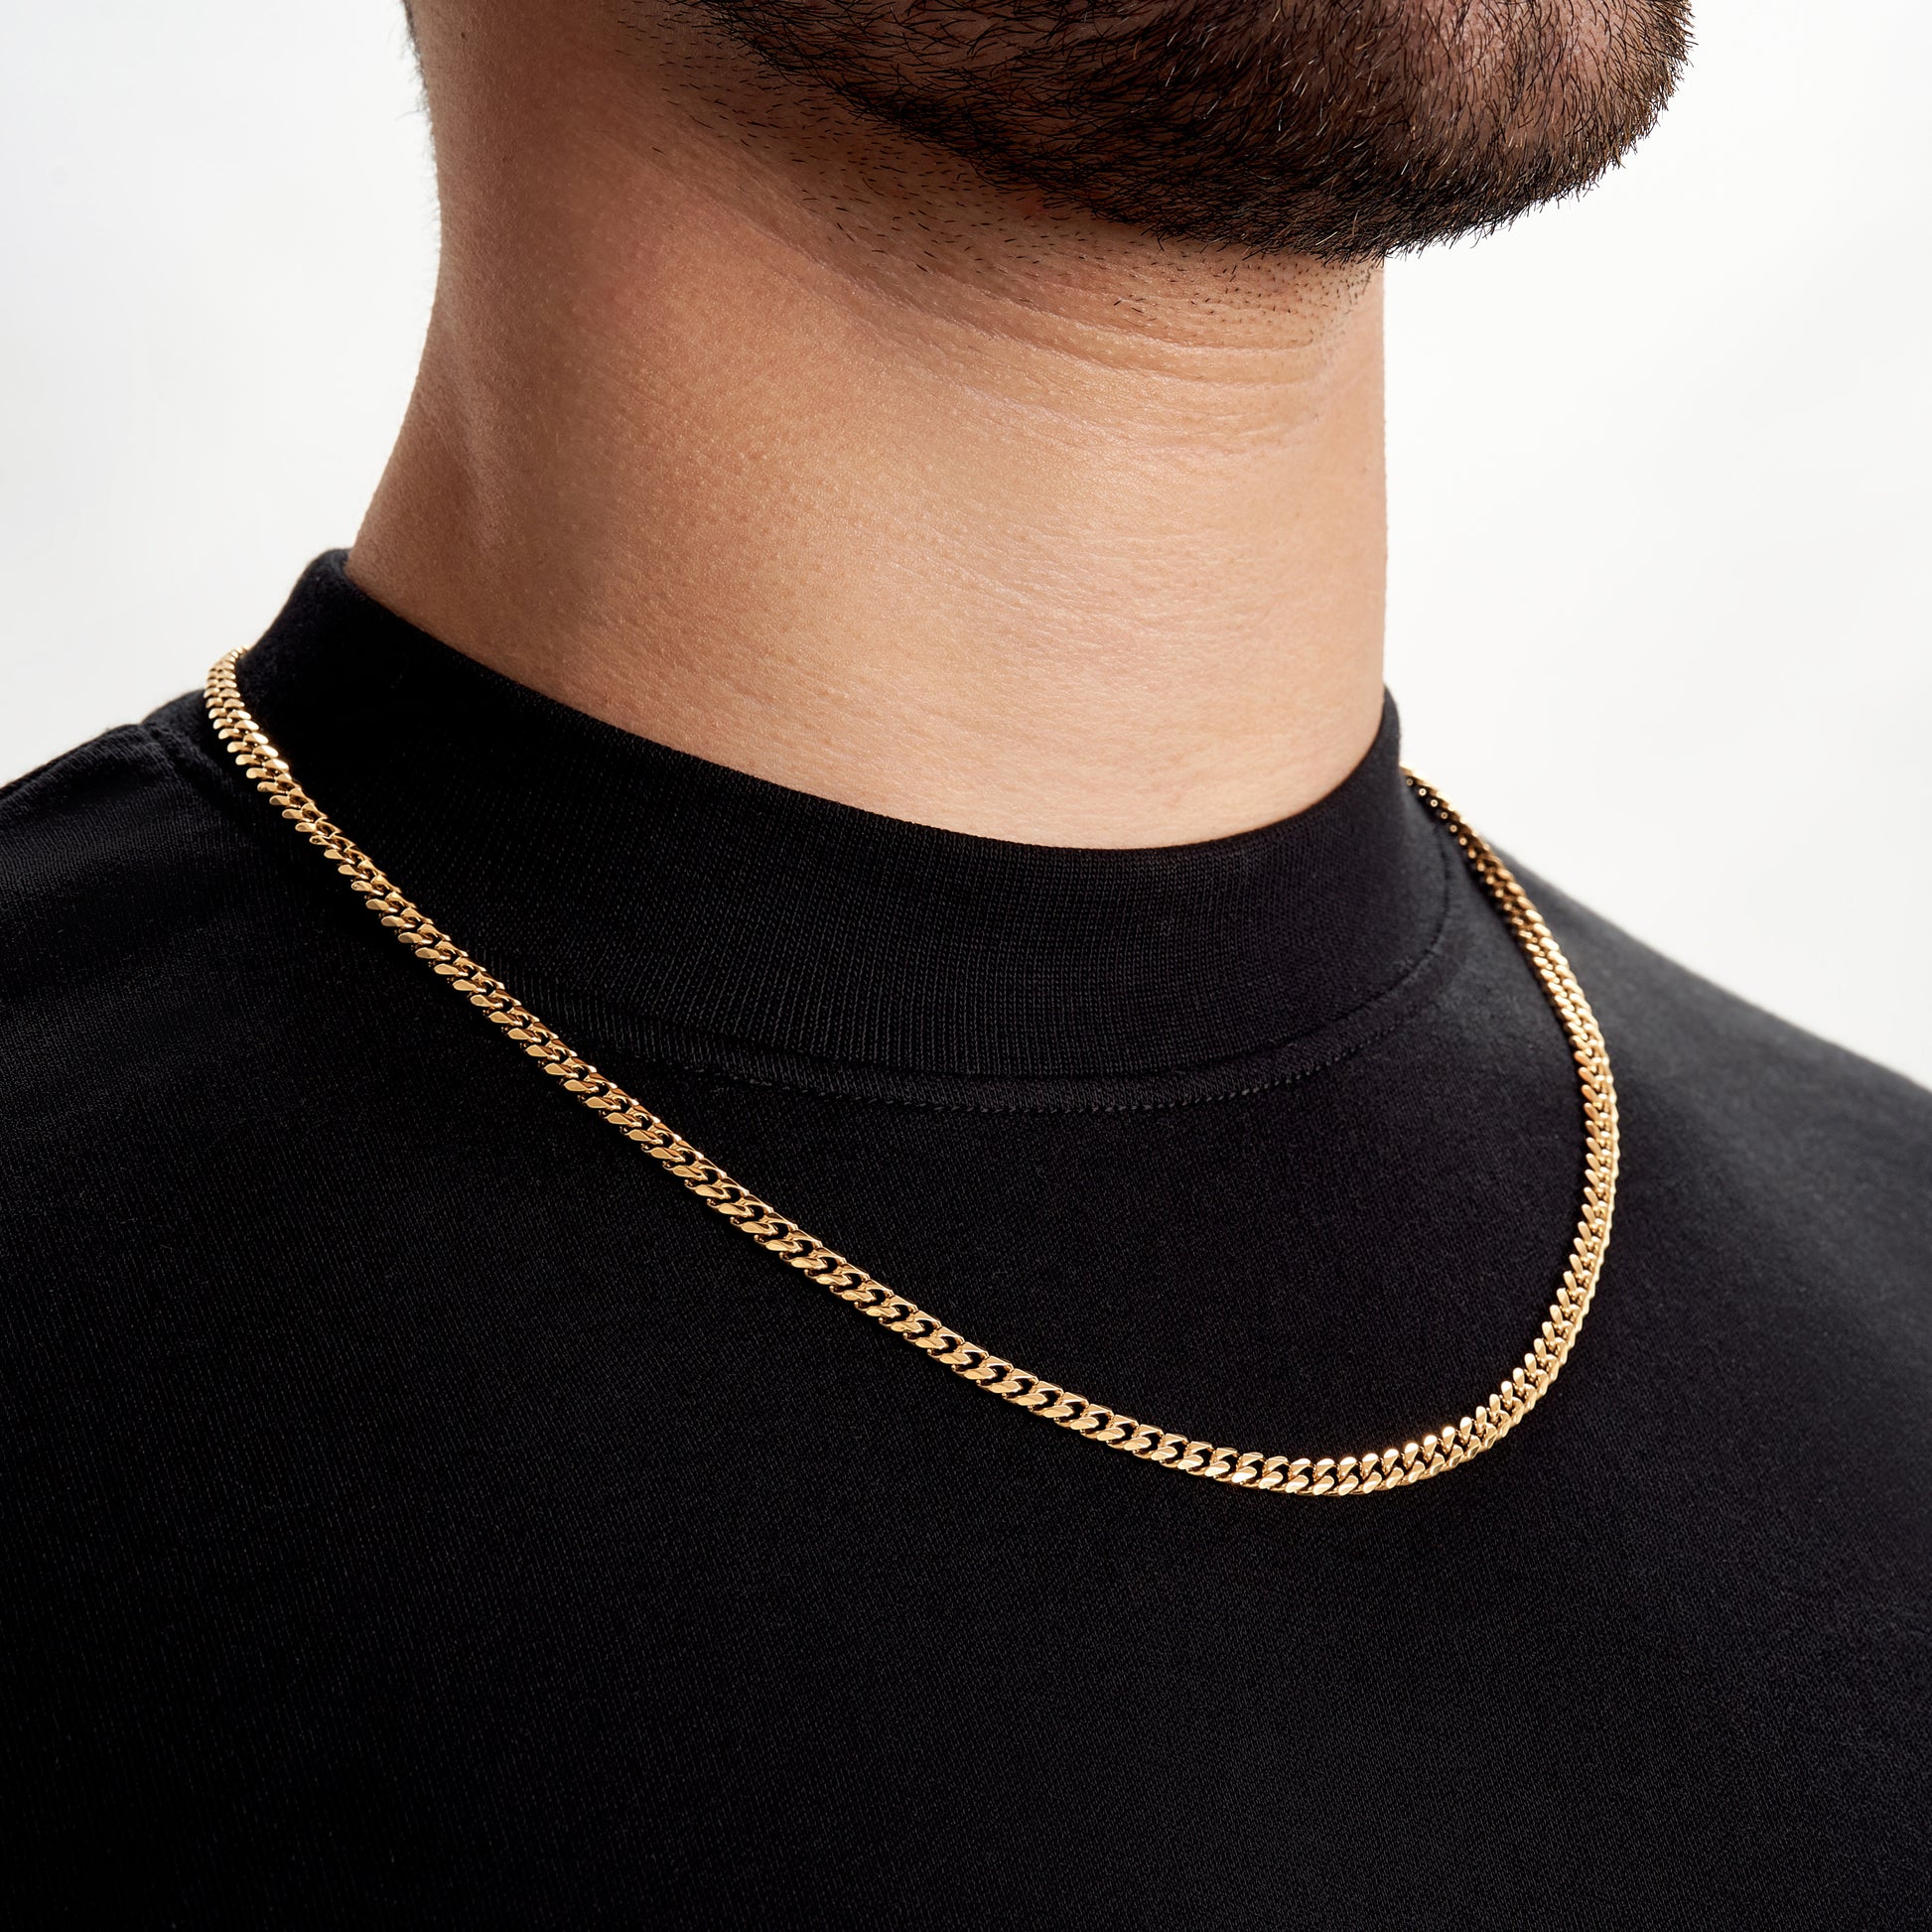 cuban gold necklace mens